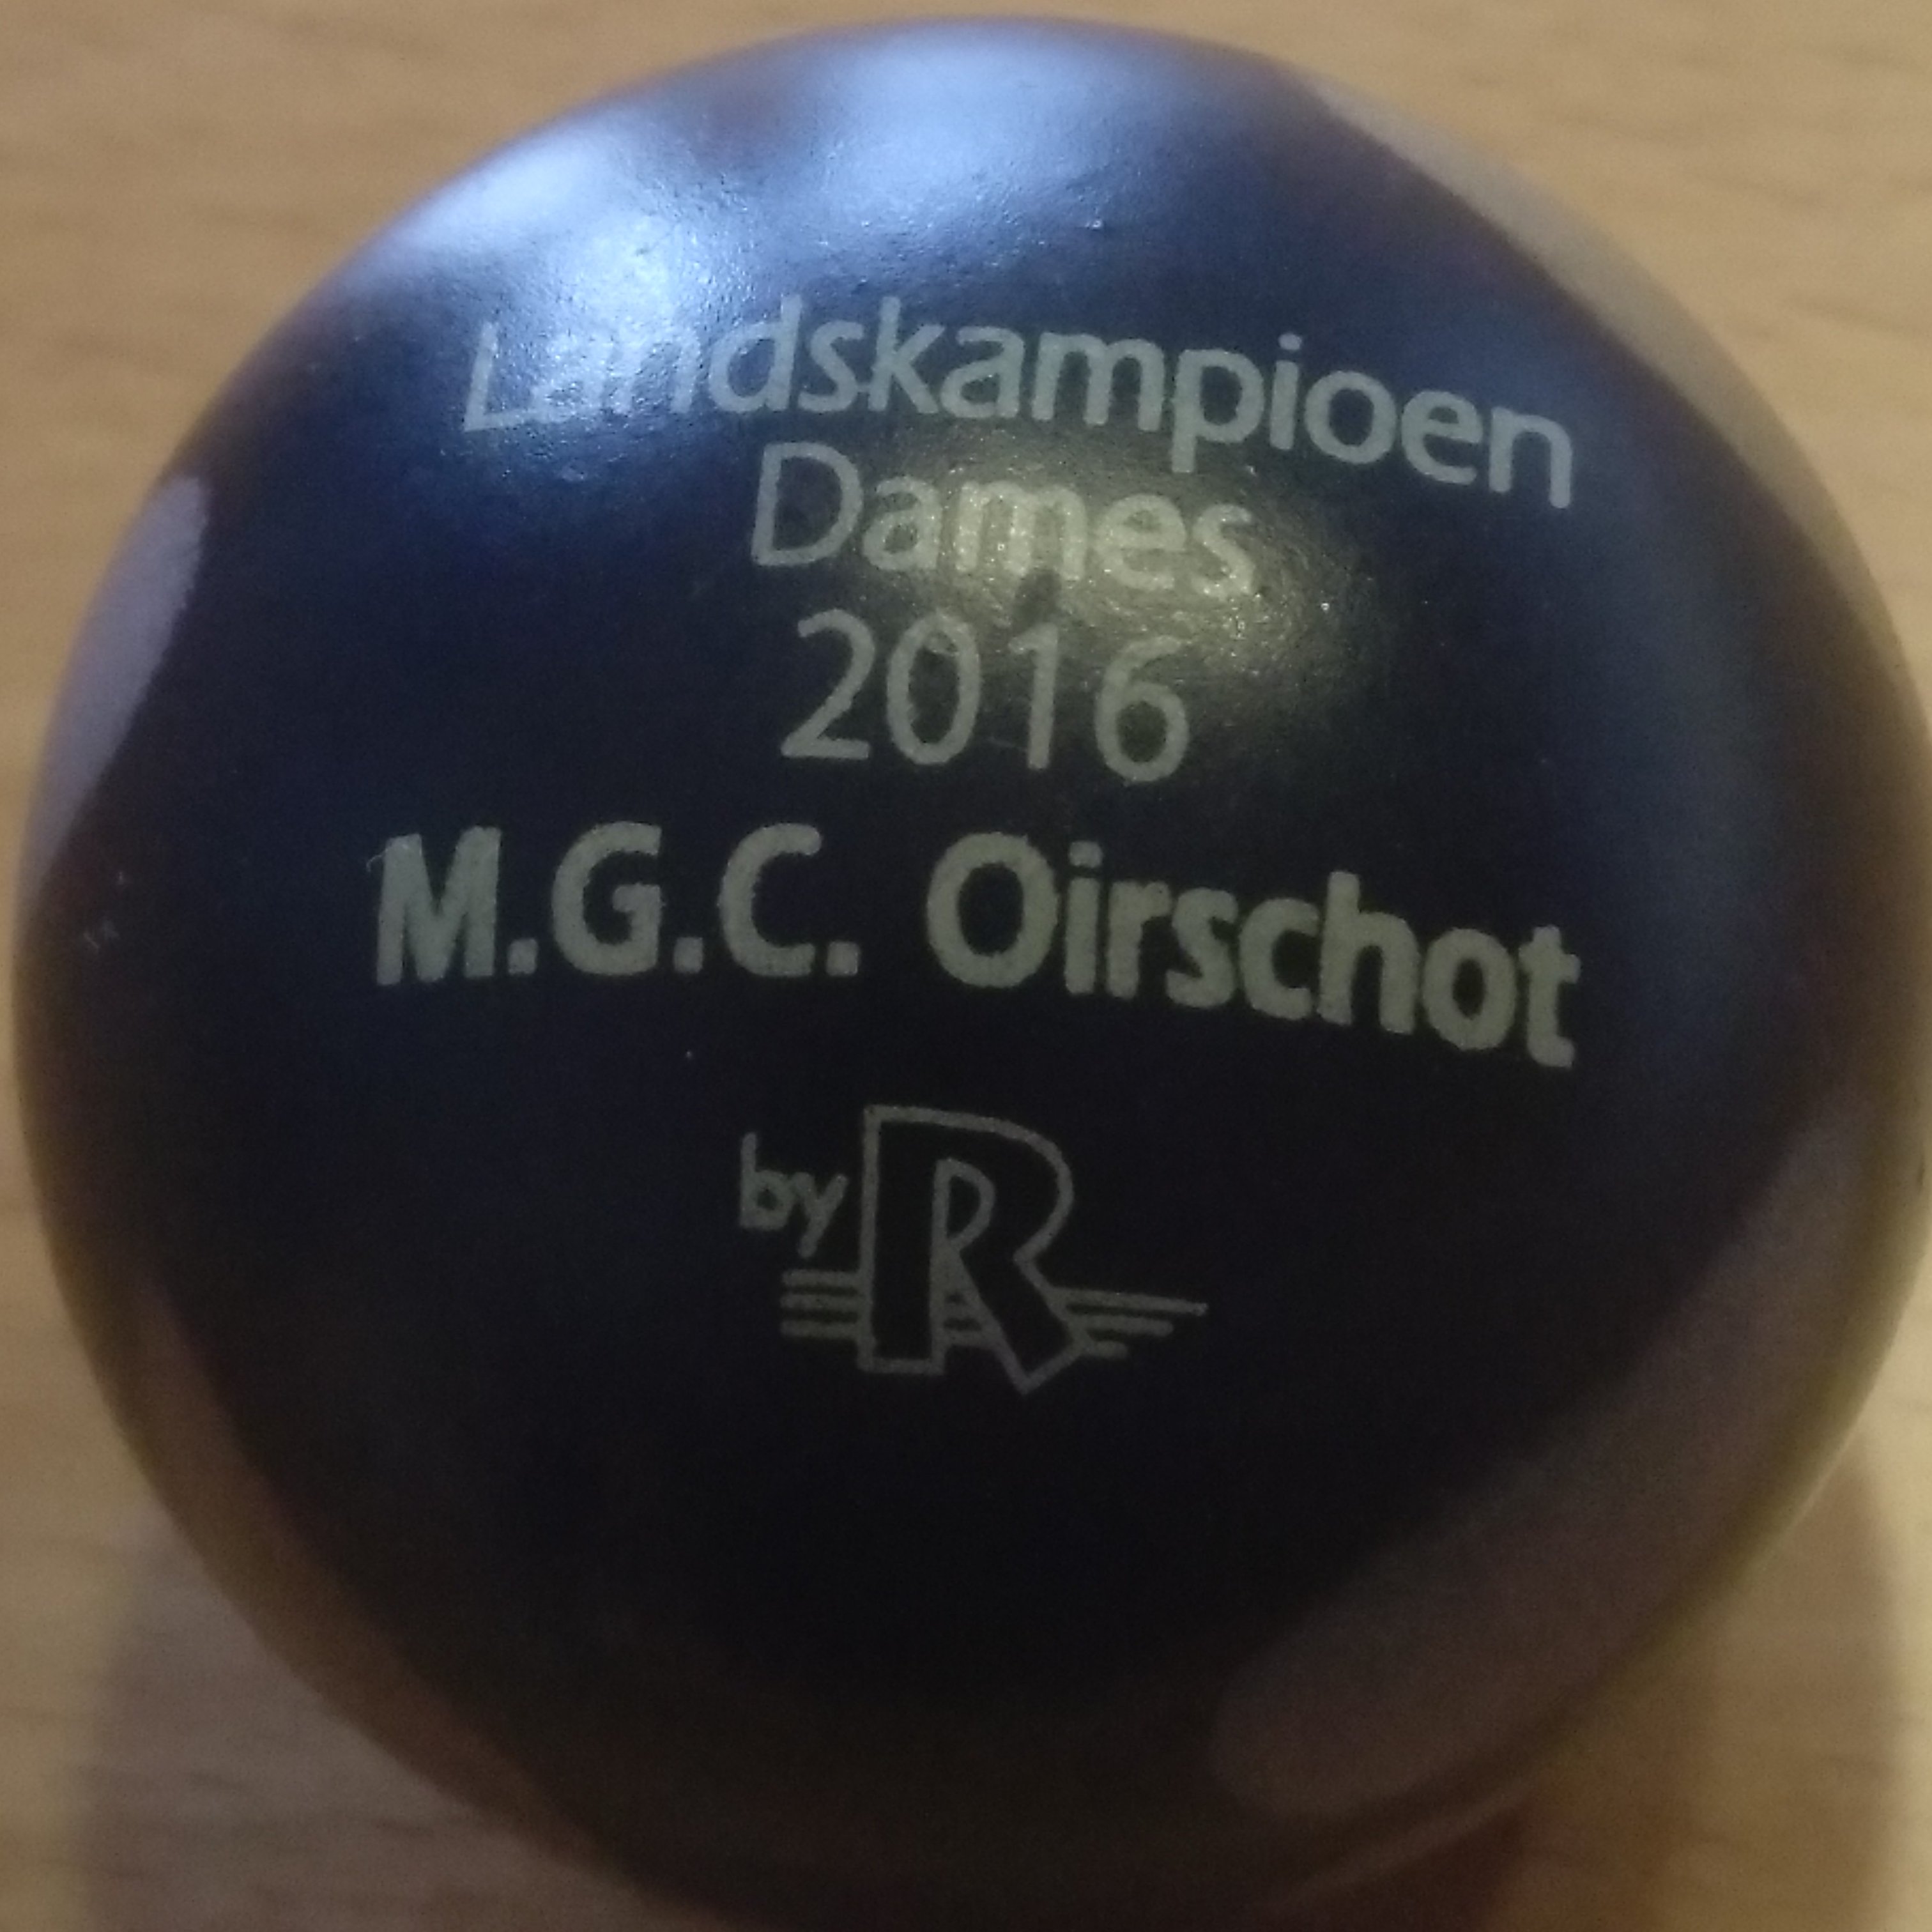 landskampioen_dames_2016_m.g.c._oirschot.jpg